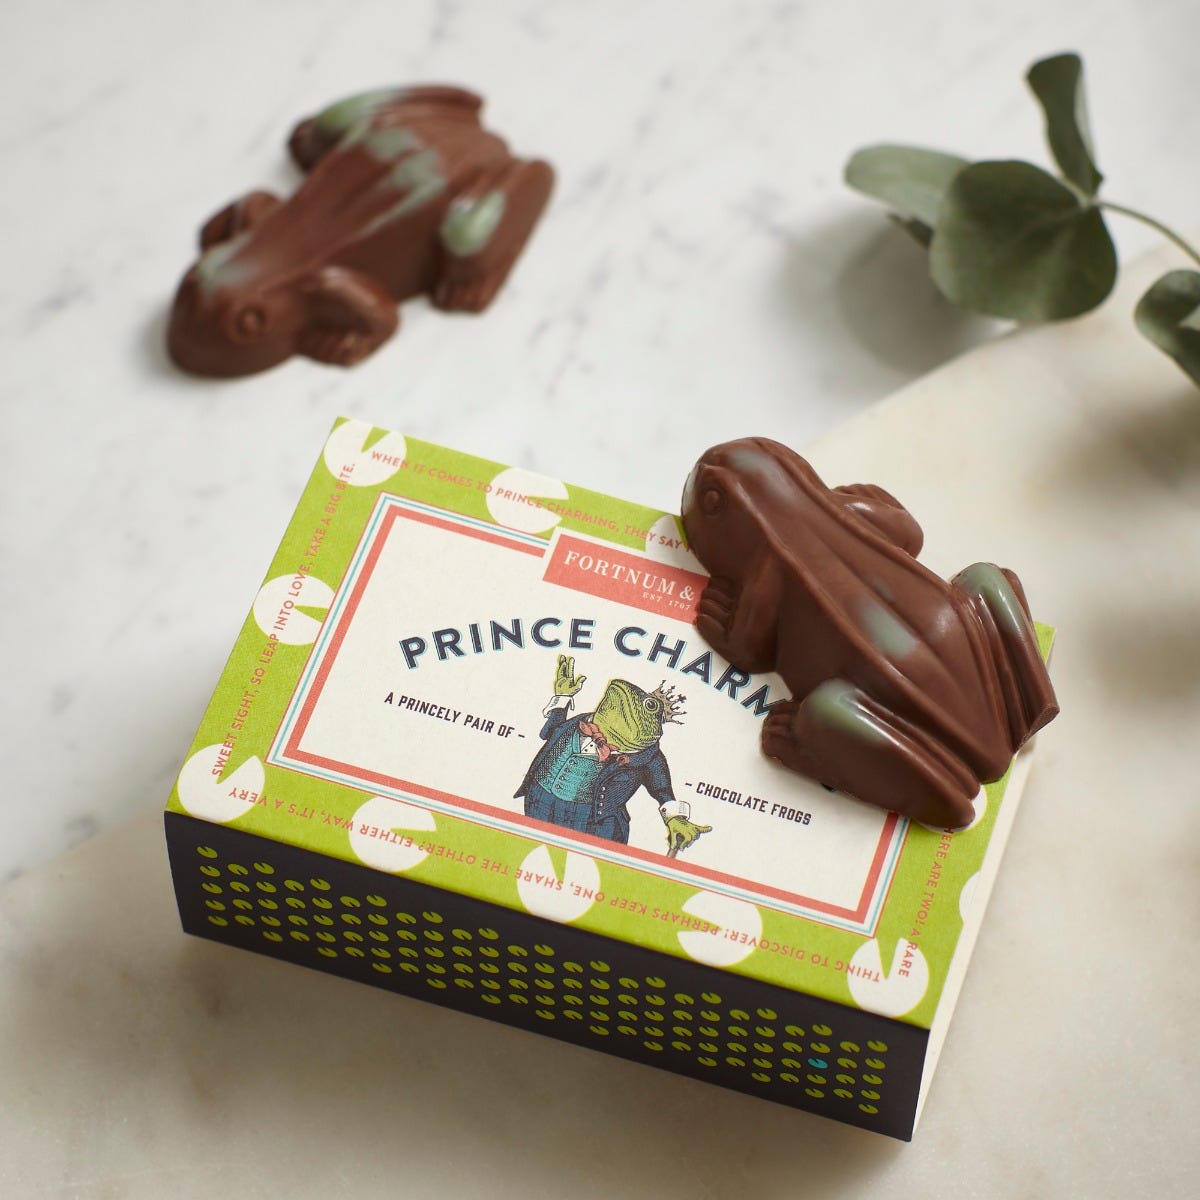 Prince Charming Chocolate Frogs, 30g, Fortnum & Mason